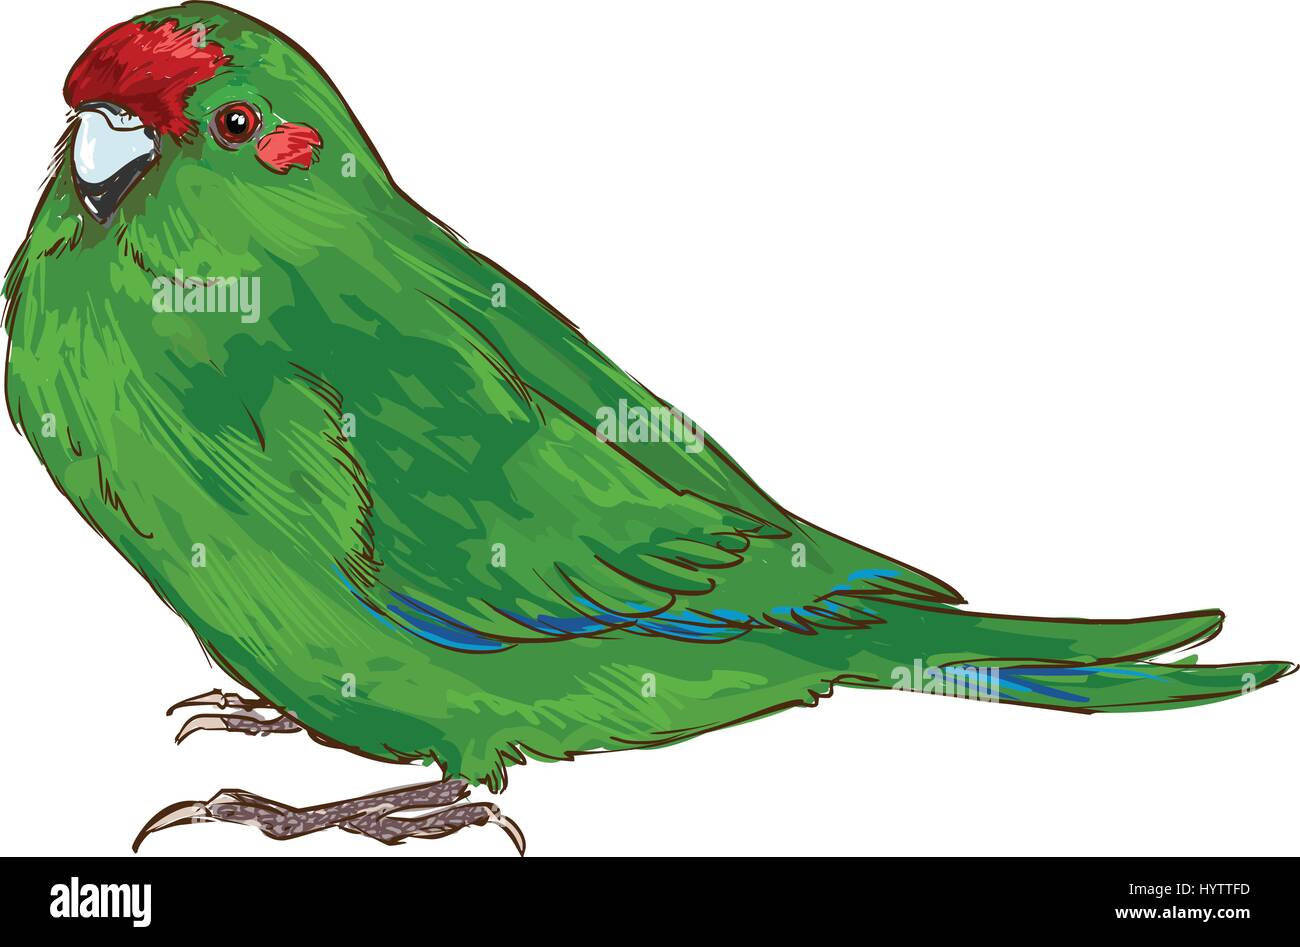 Fond blanc vector illustration d'un perroquet vert Illustration de Vecteur